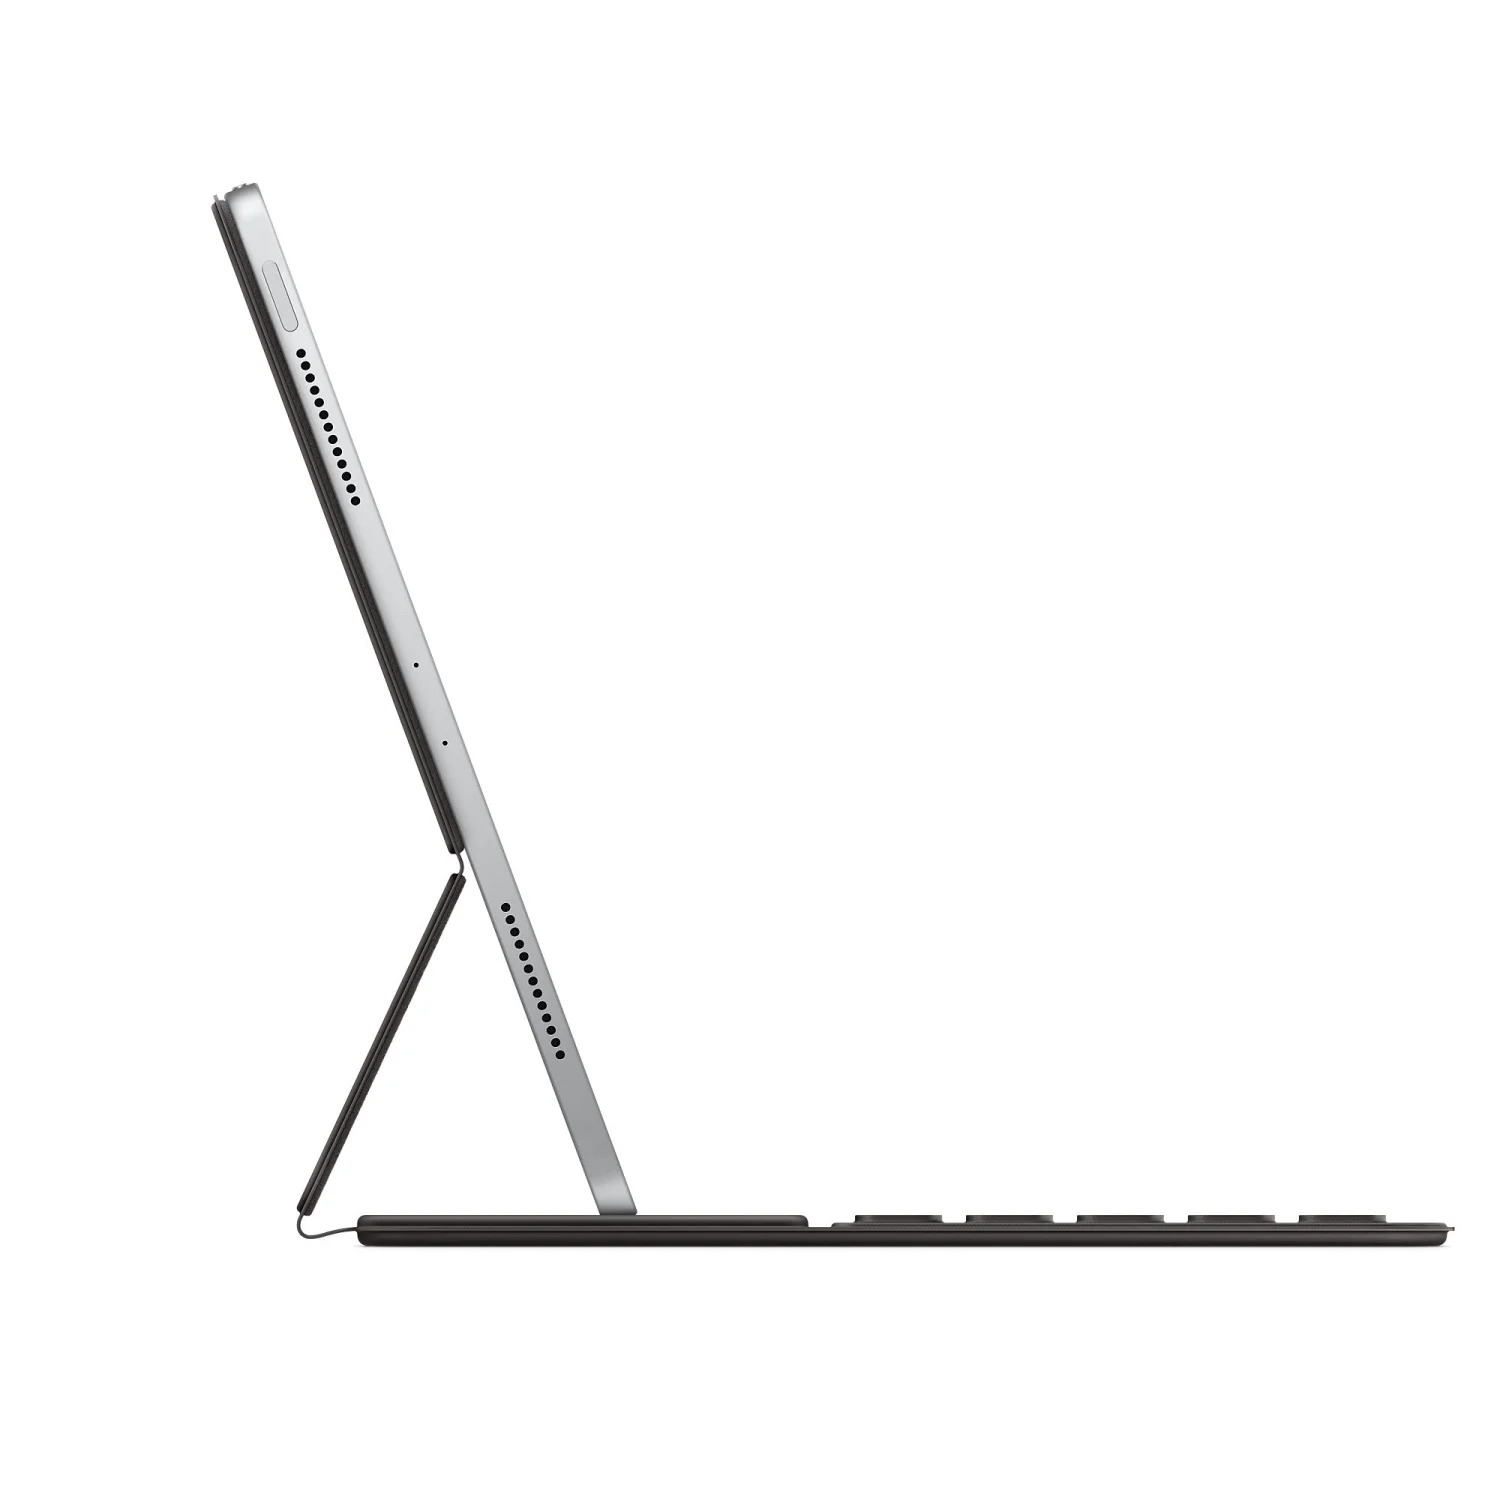 Teclado Apple para iPad PRO - Space gray (MXNK2LL/A)